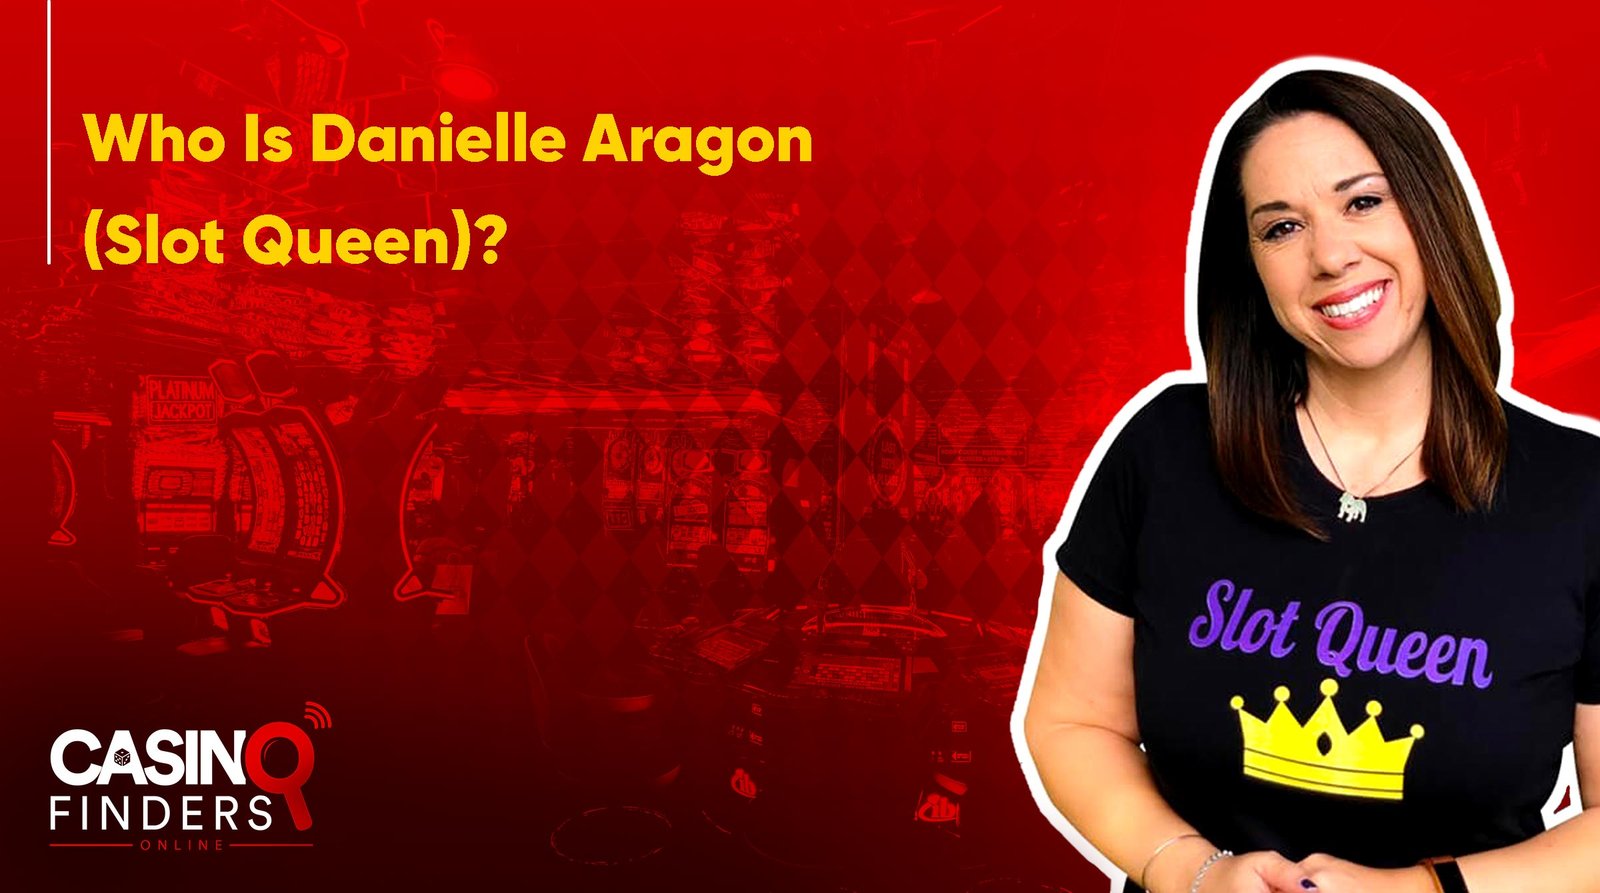 Danielle Aragon (Slot Queen